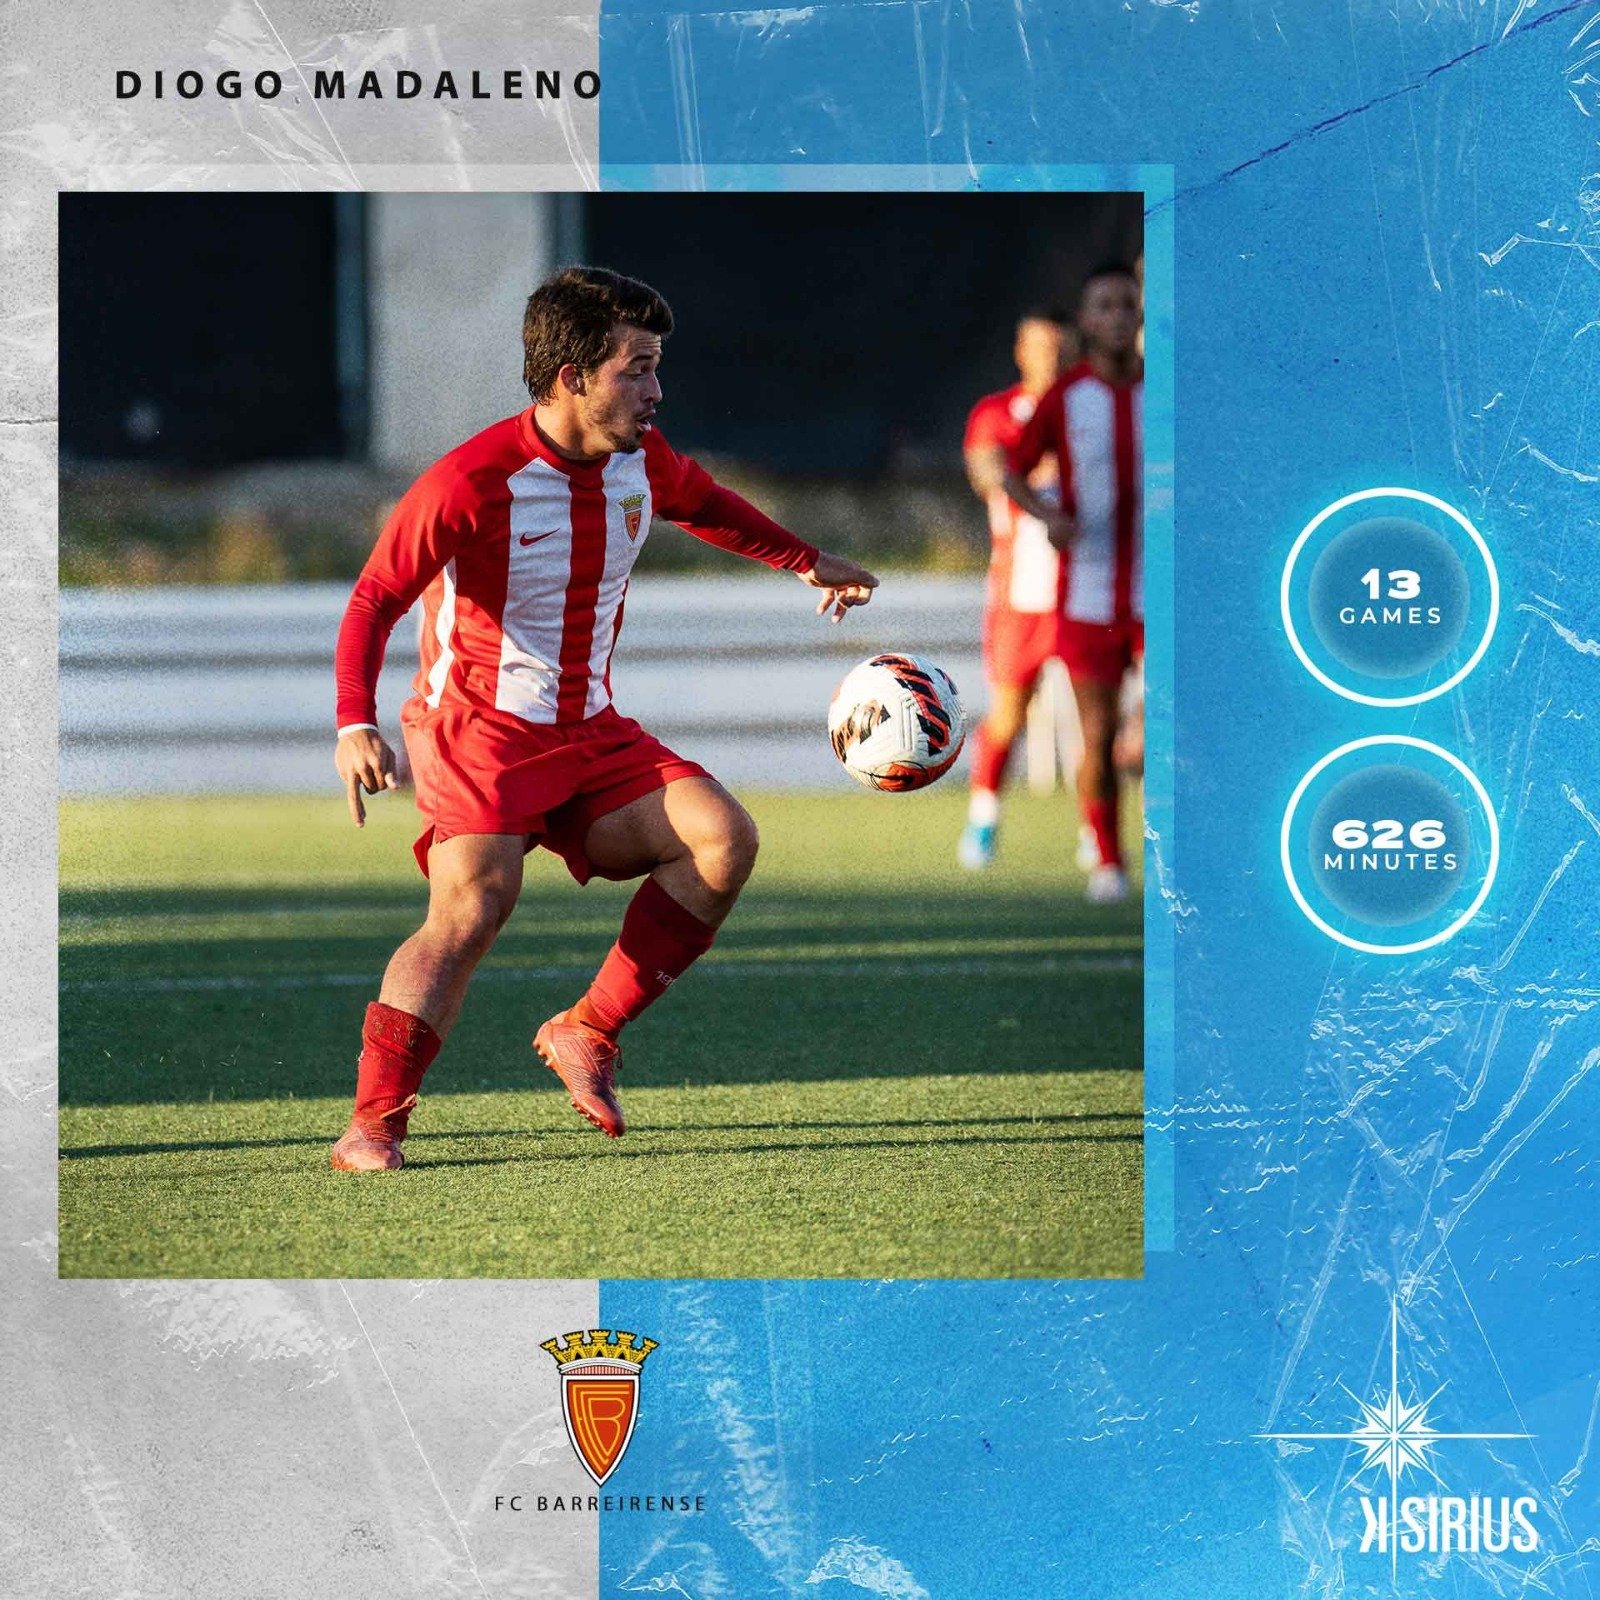 Stats: Diogo Madaleno (FC Barreirense)